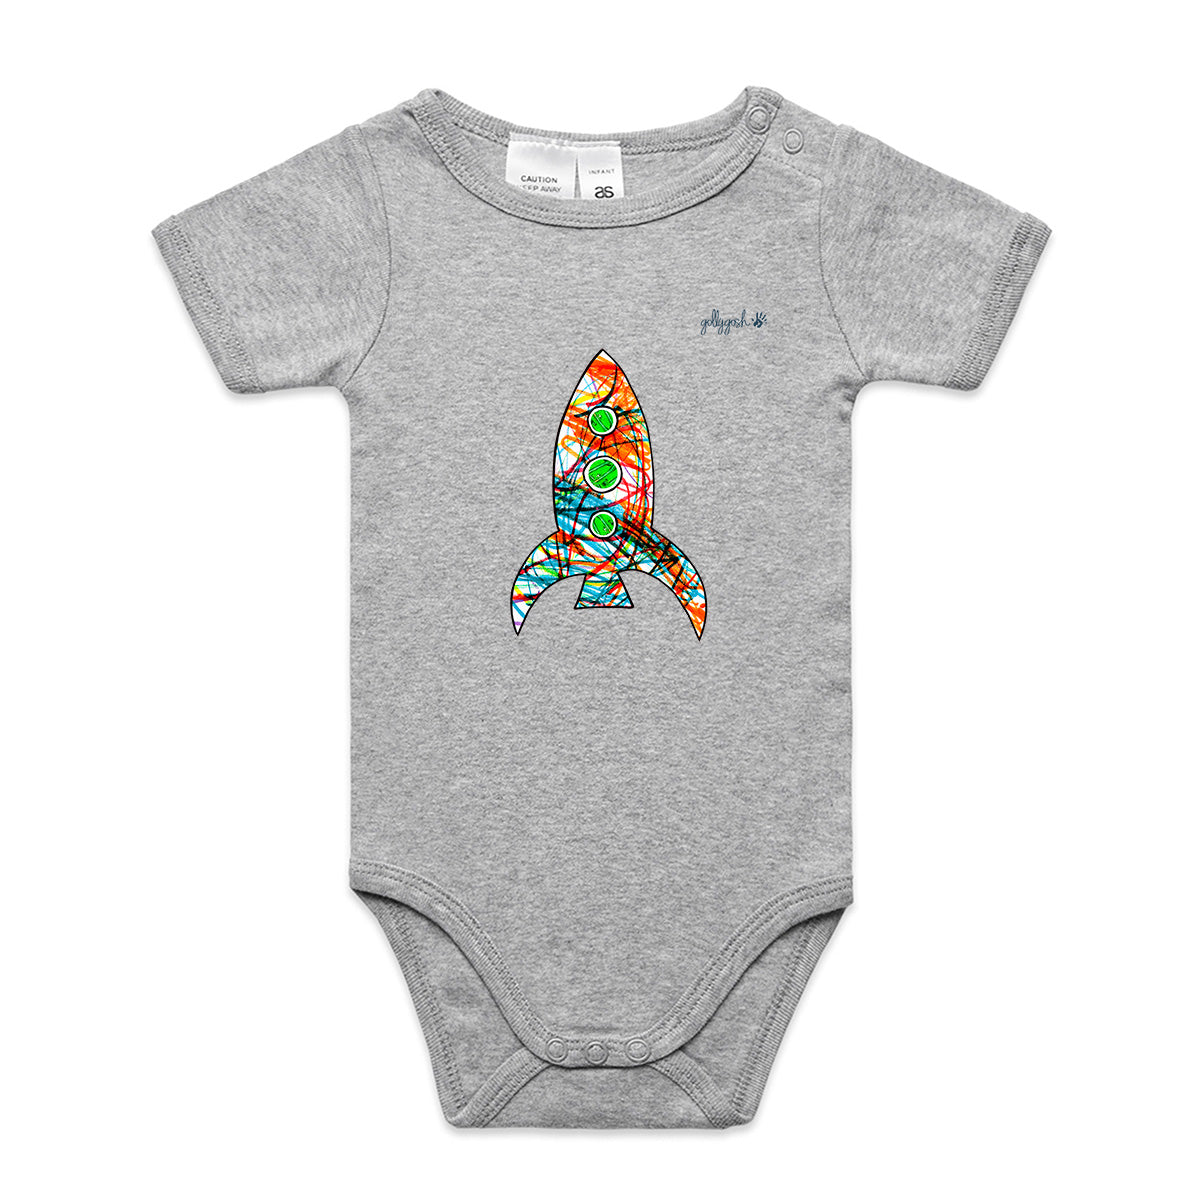 Rocket - Infant Baby Grow